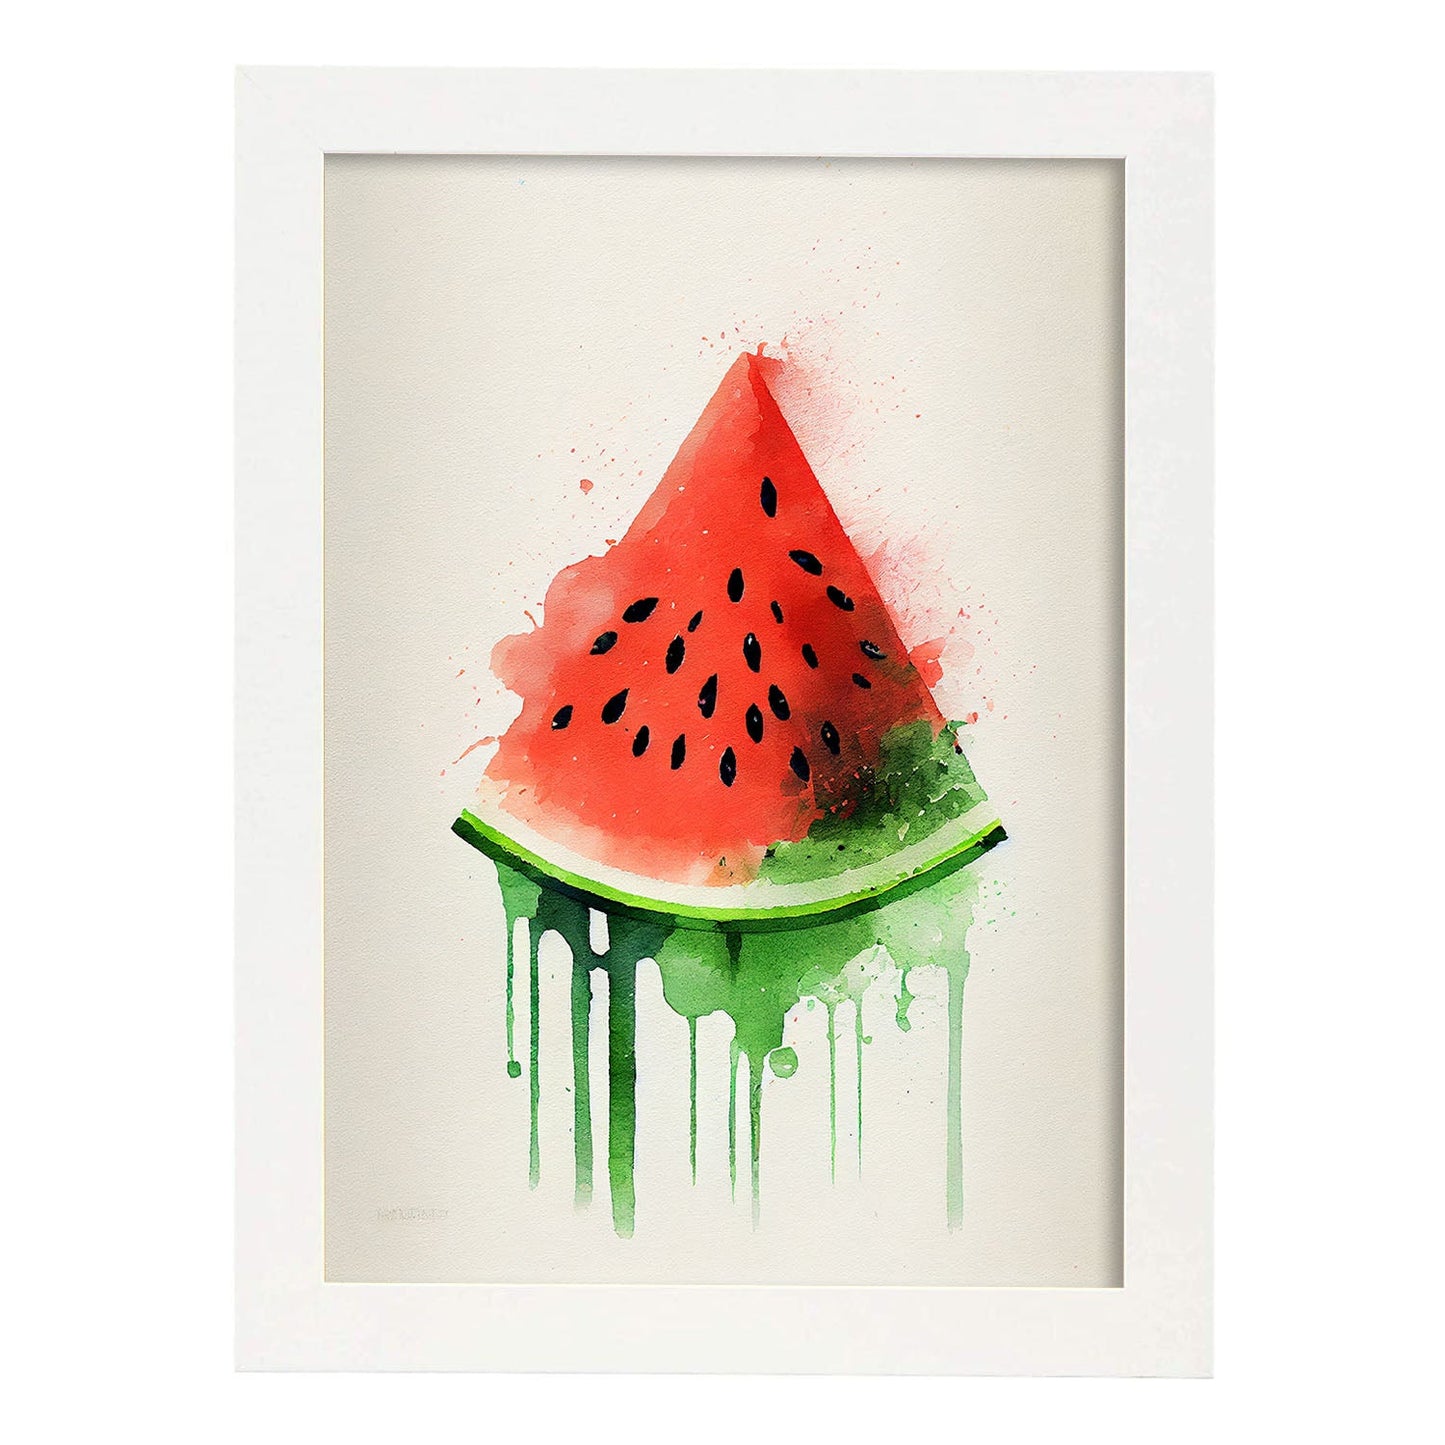 Nacnic minimalist Watermelon_1. Aesthetic Wall Art Prints for Bedroom or Living Room Design.-Artwork-Nacnic-A4-Marco Blanco-Nacnic Estudio SL